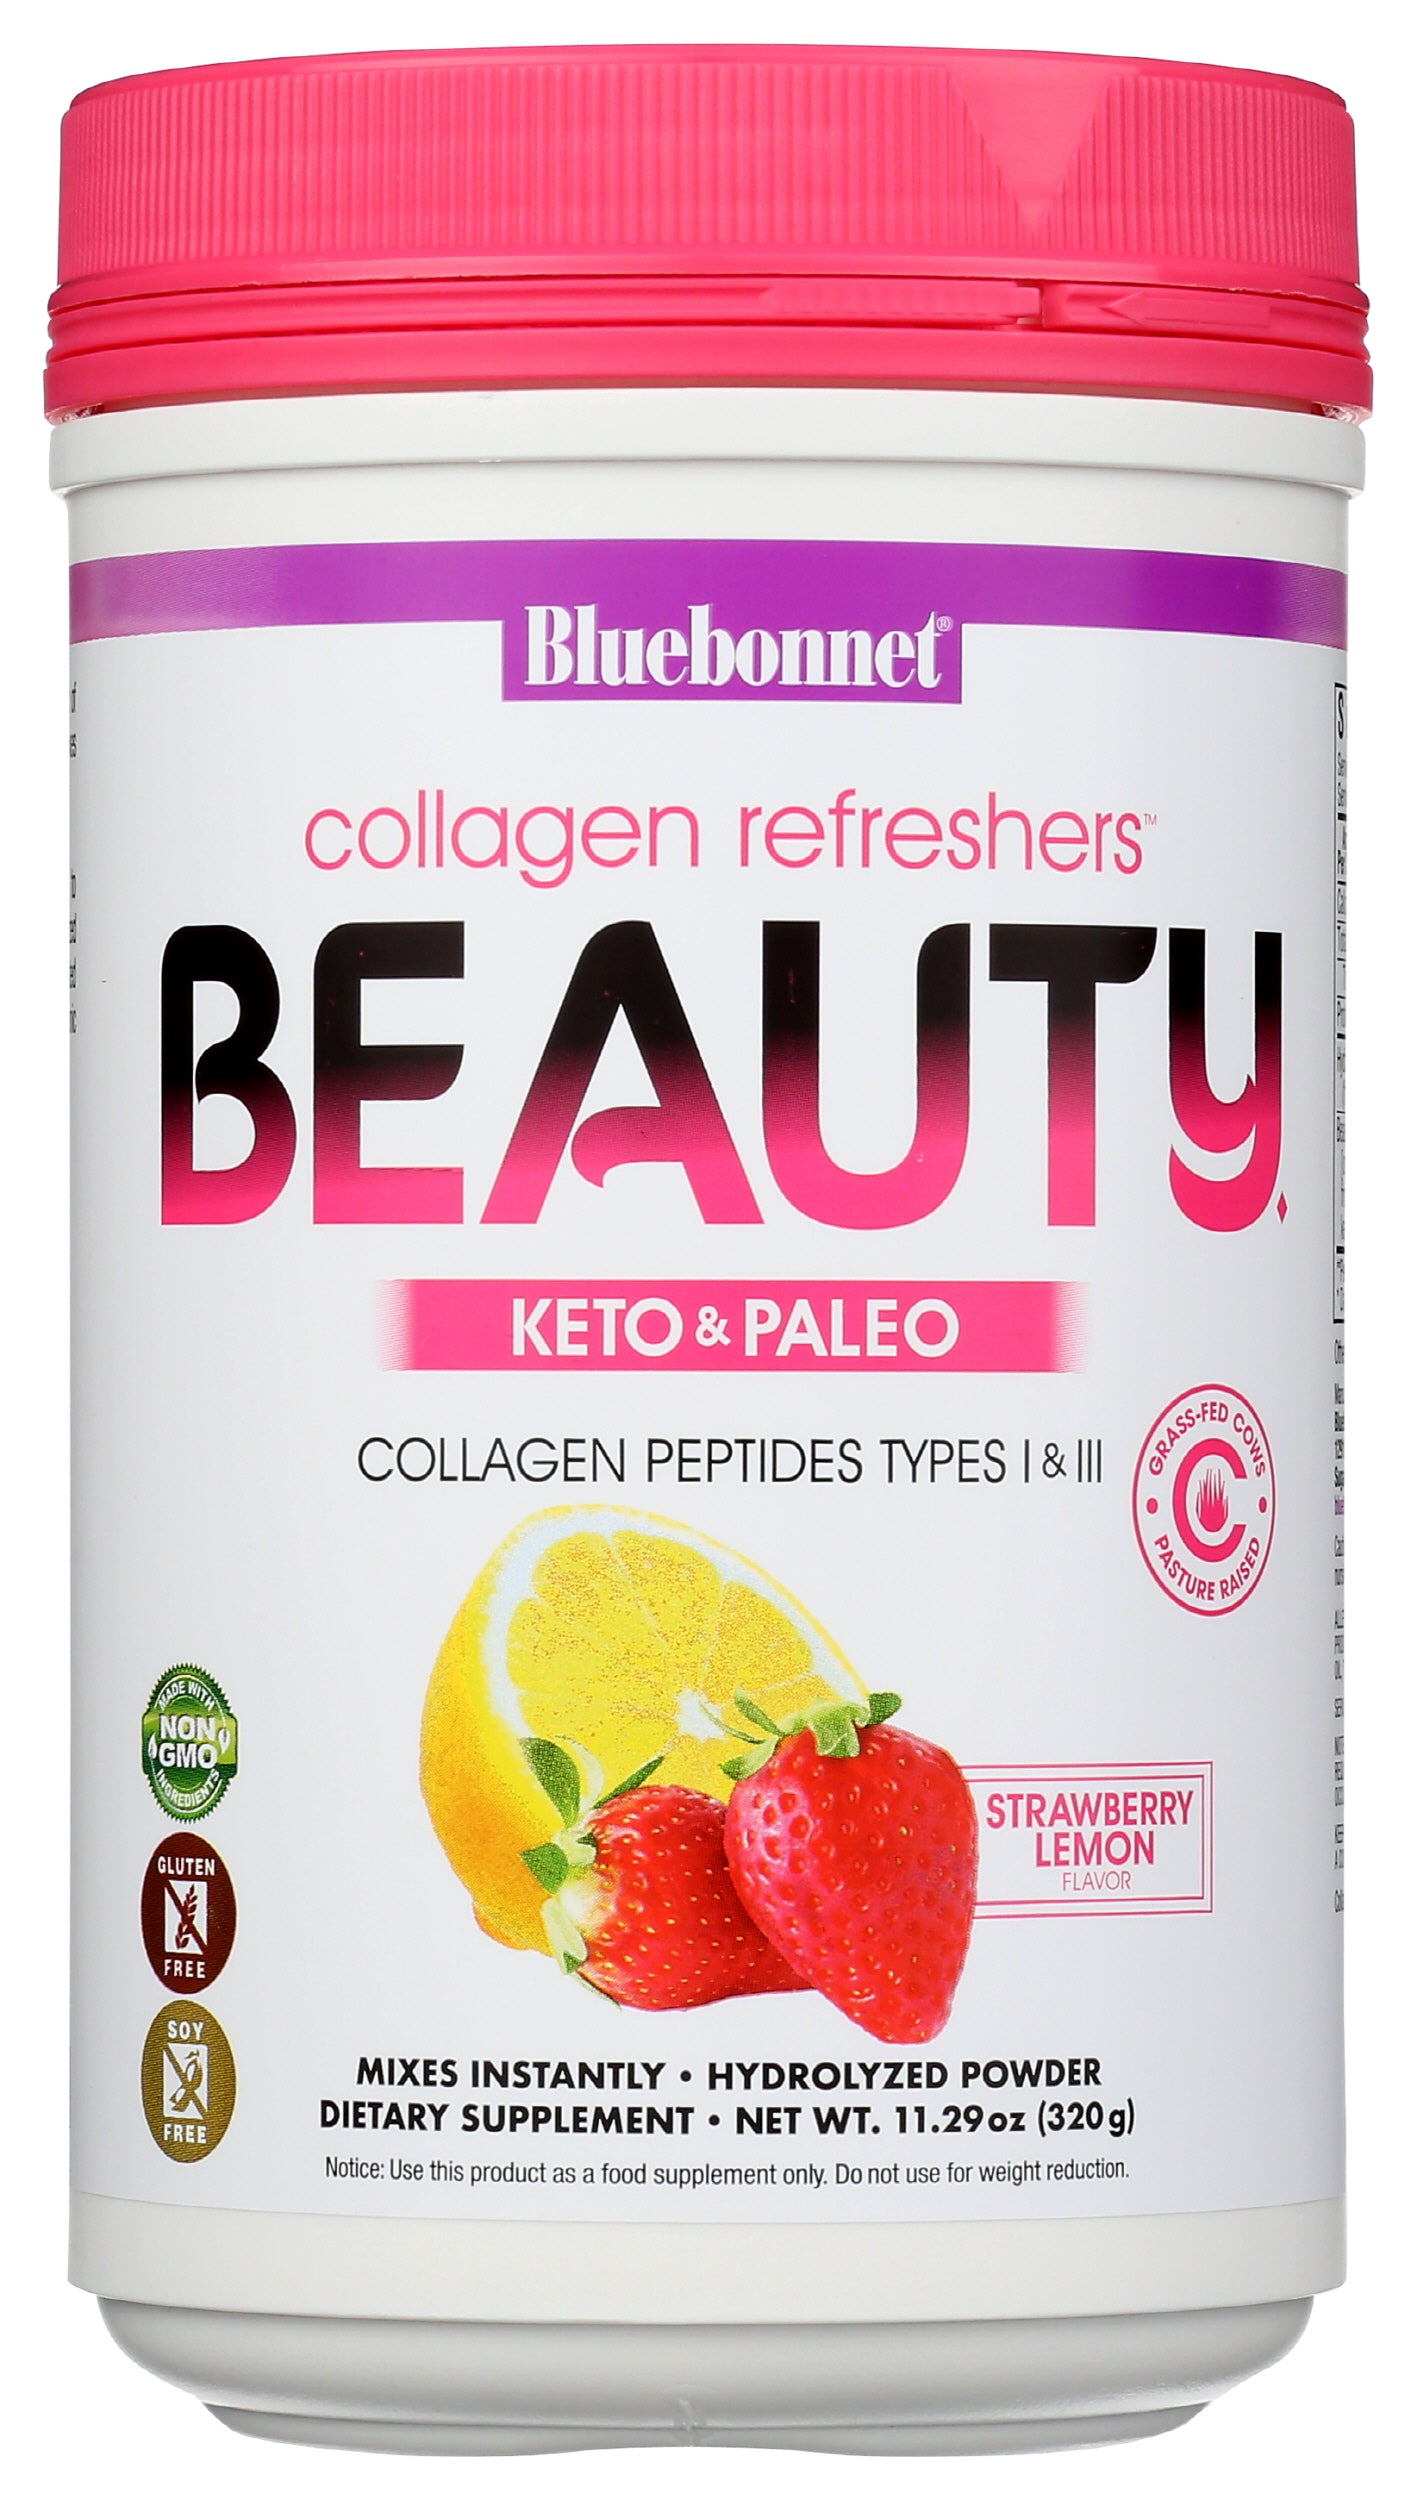 Bluebonnet Beauty Keto & Paleo Collagen Peptides 320g Front of Tub